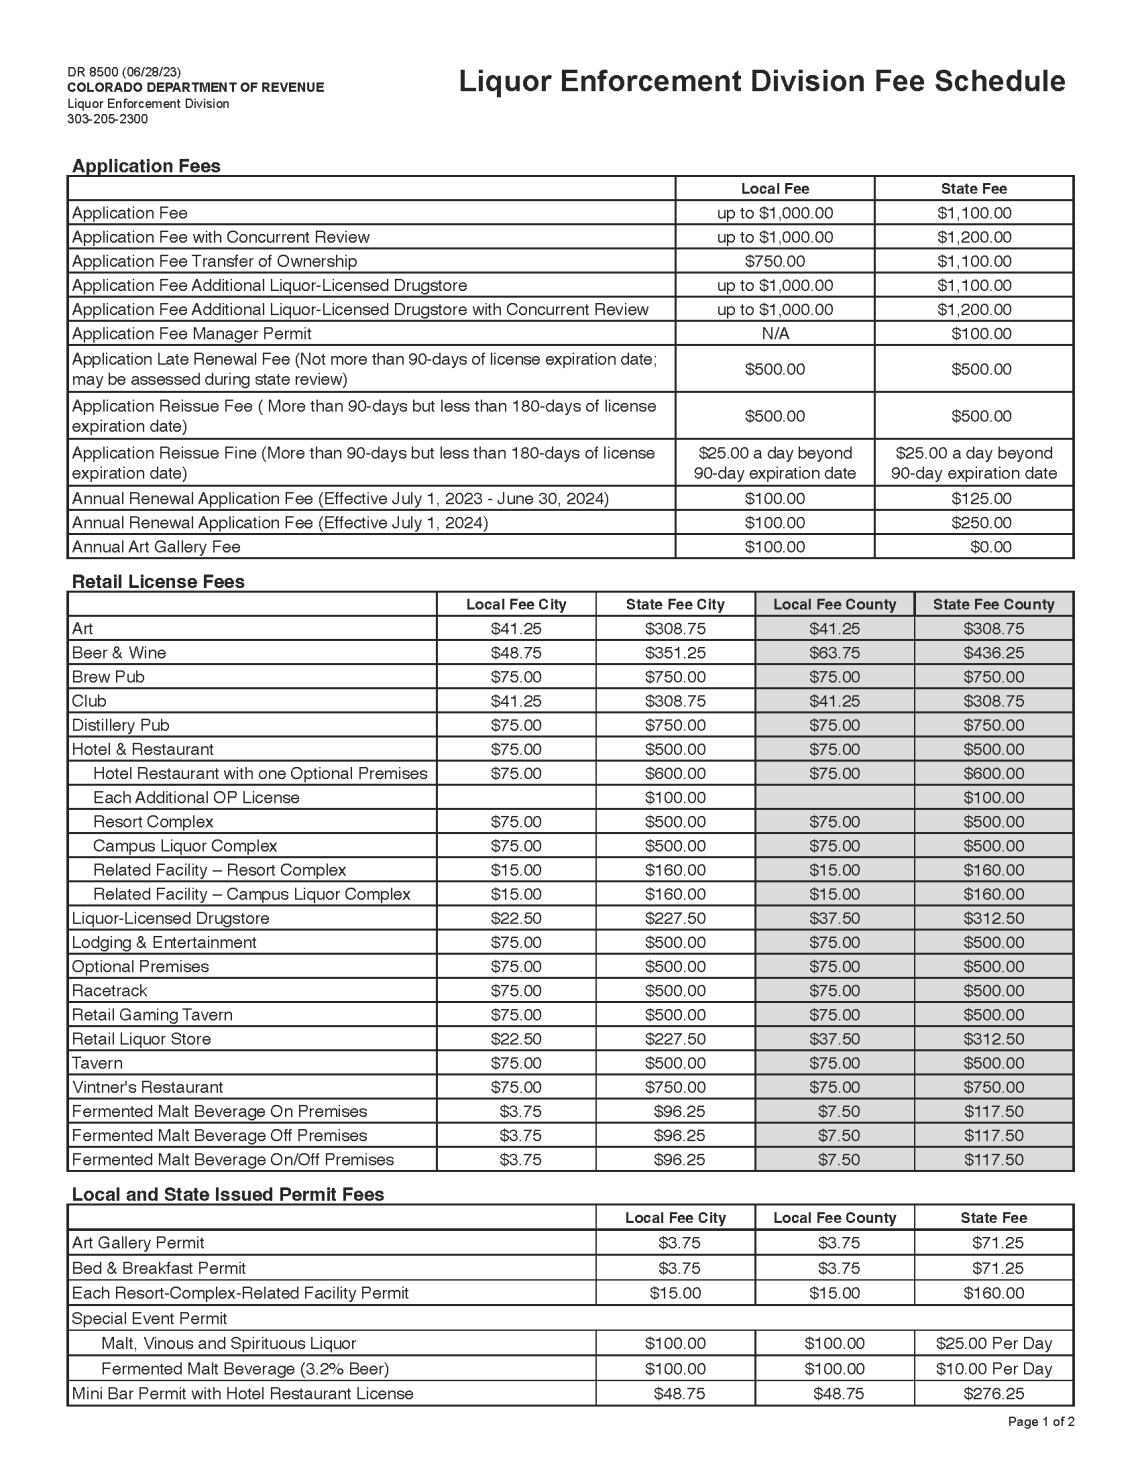 Liquor Enforcement Division Fee Schedule Page One